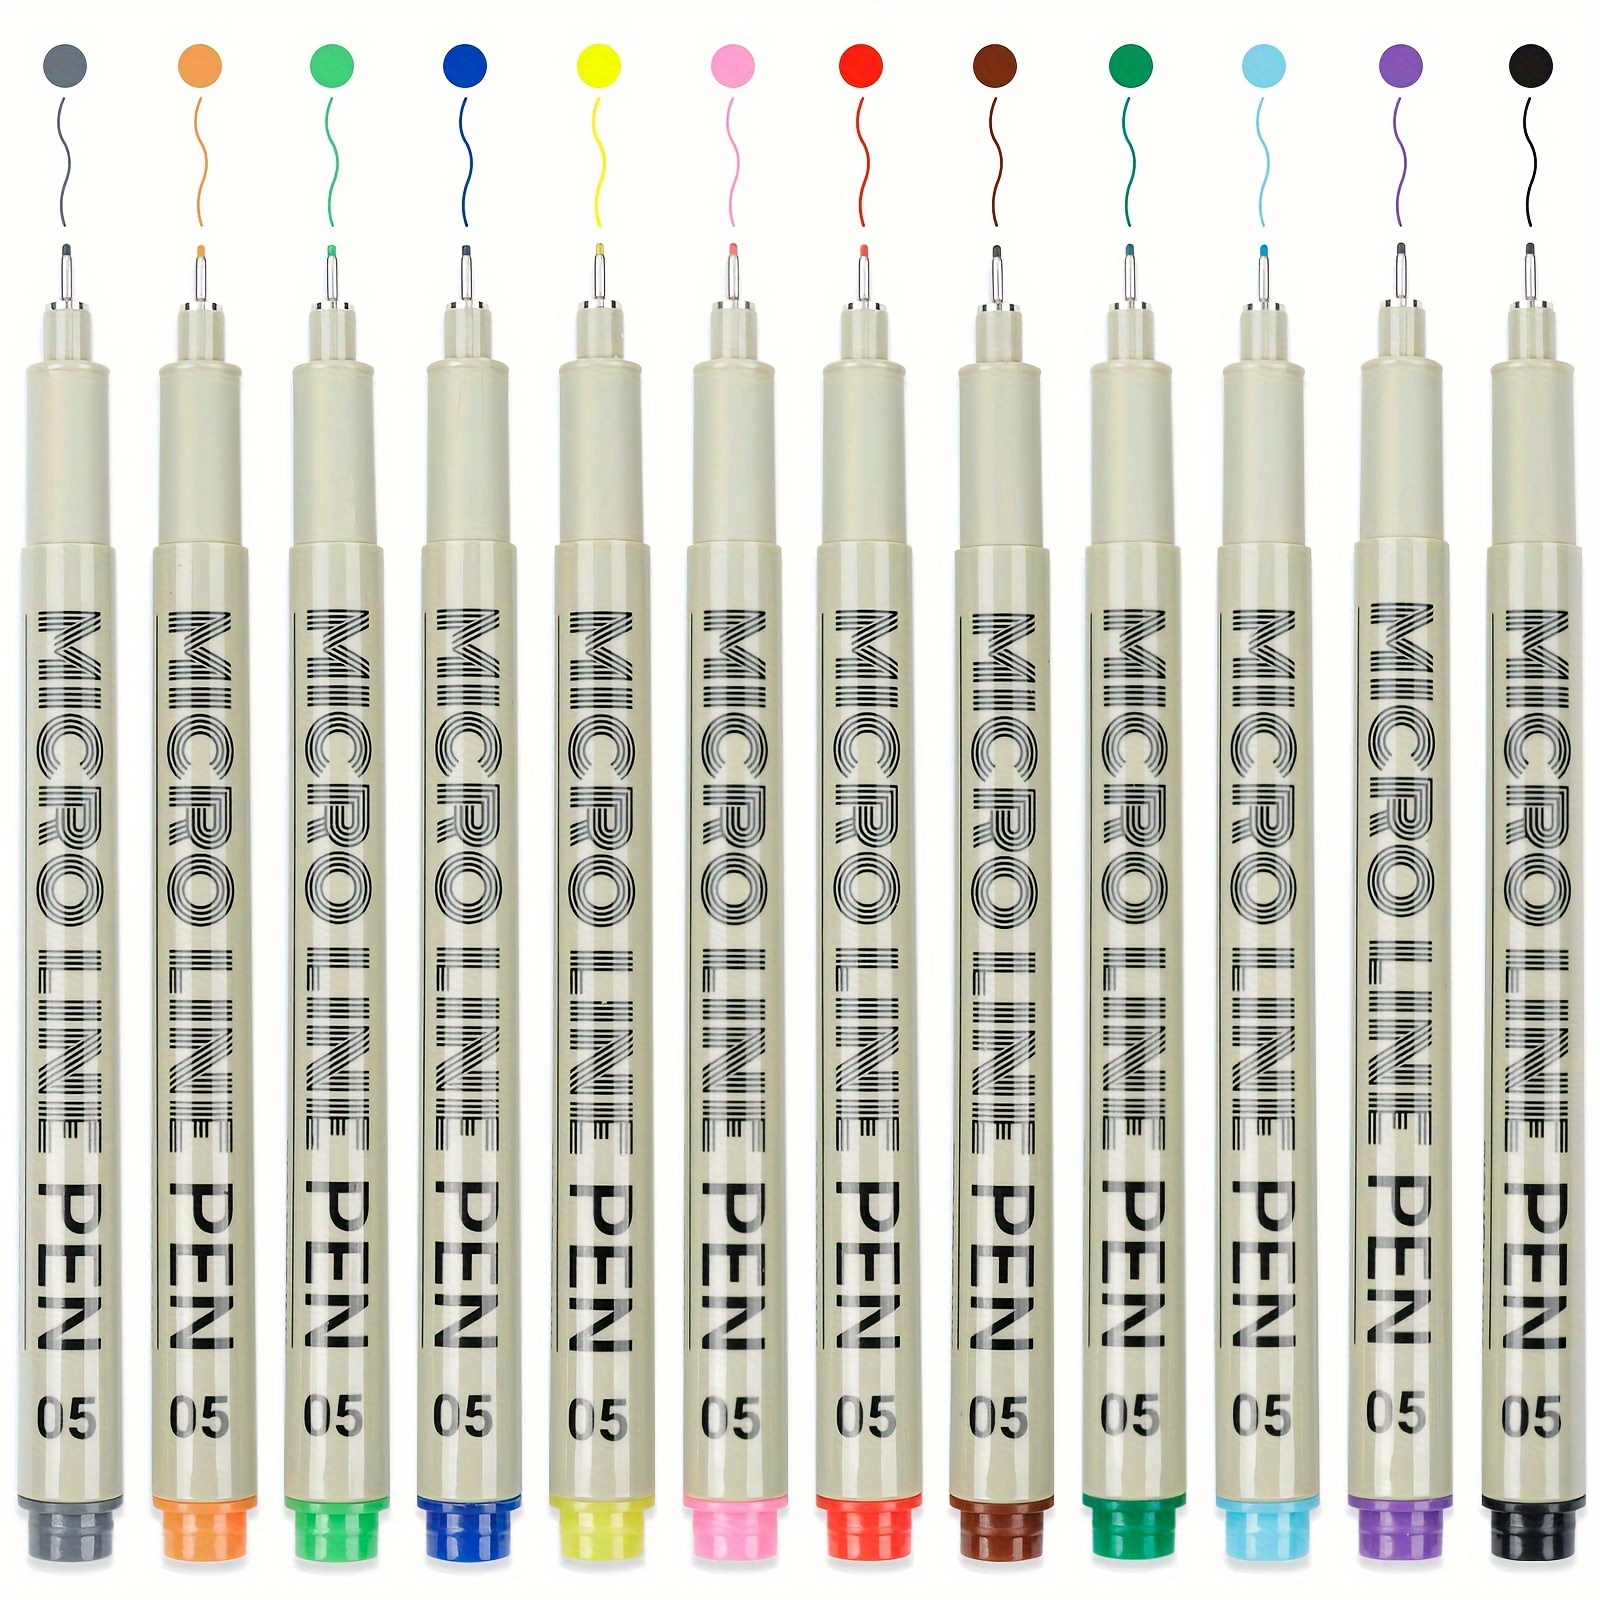 

12 Pcs Colored Micro Pens 05, Fineliner Pens Waterproof Archival Ink Set, Fine Point Pen, Ultra Fine, Drawing Art Pens For Illustrating Journaling Zentangle Supplies